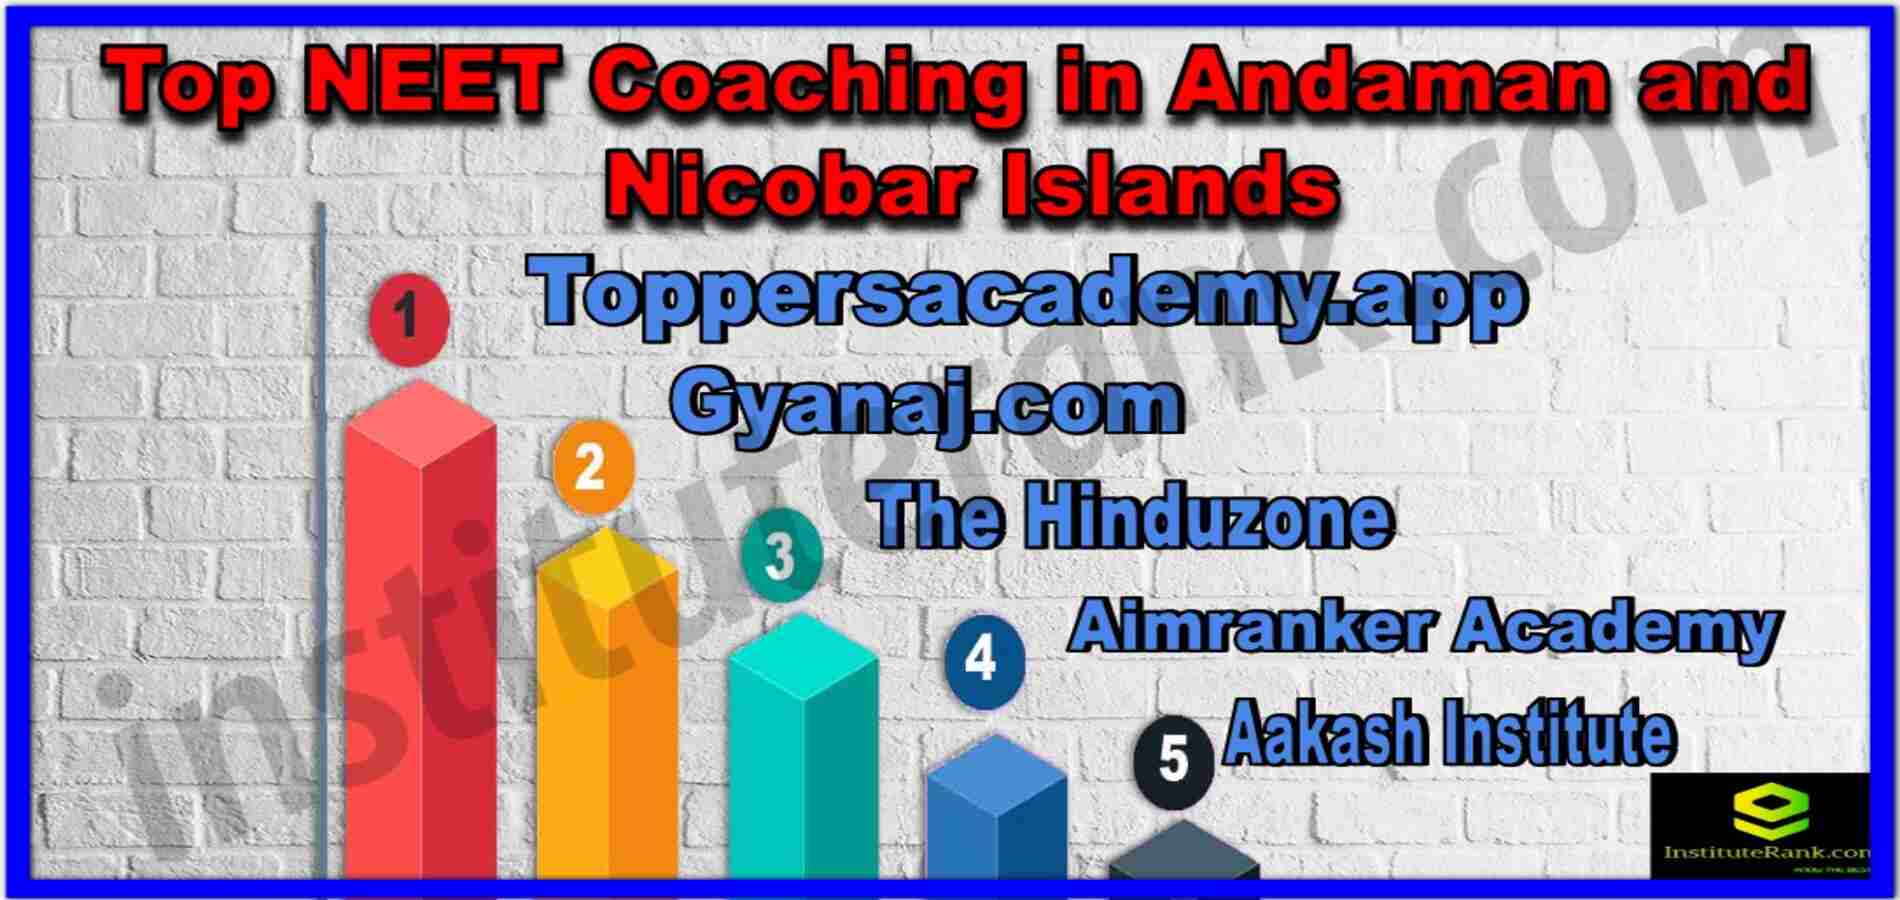 Top NEET Coaching in Andaman and Nicobar Islands